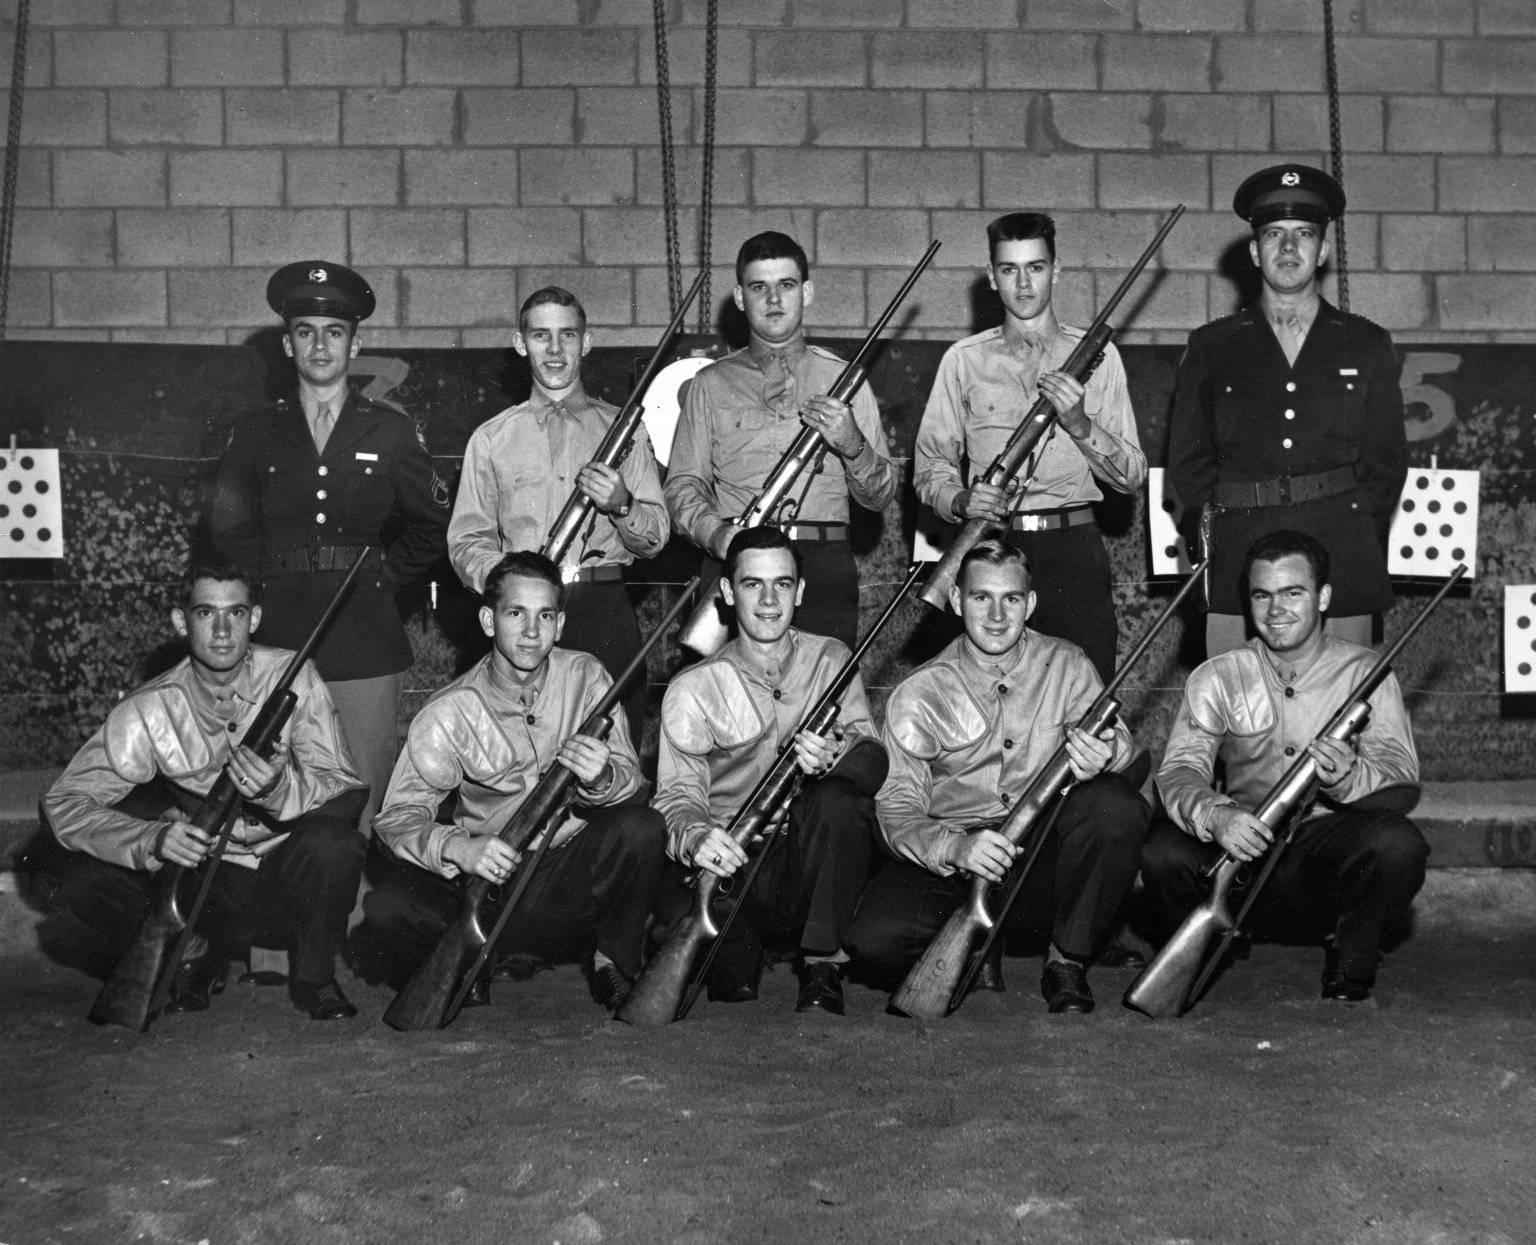 Cadet Rifle Team group photo, vintage